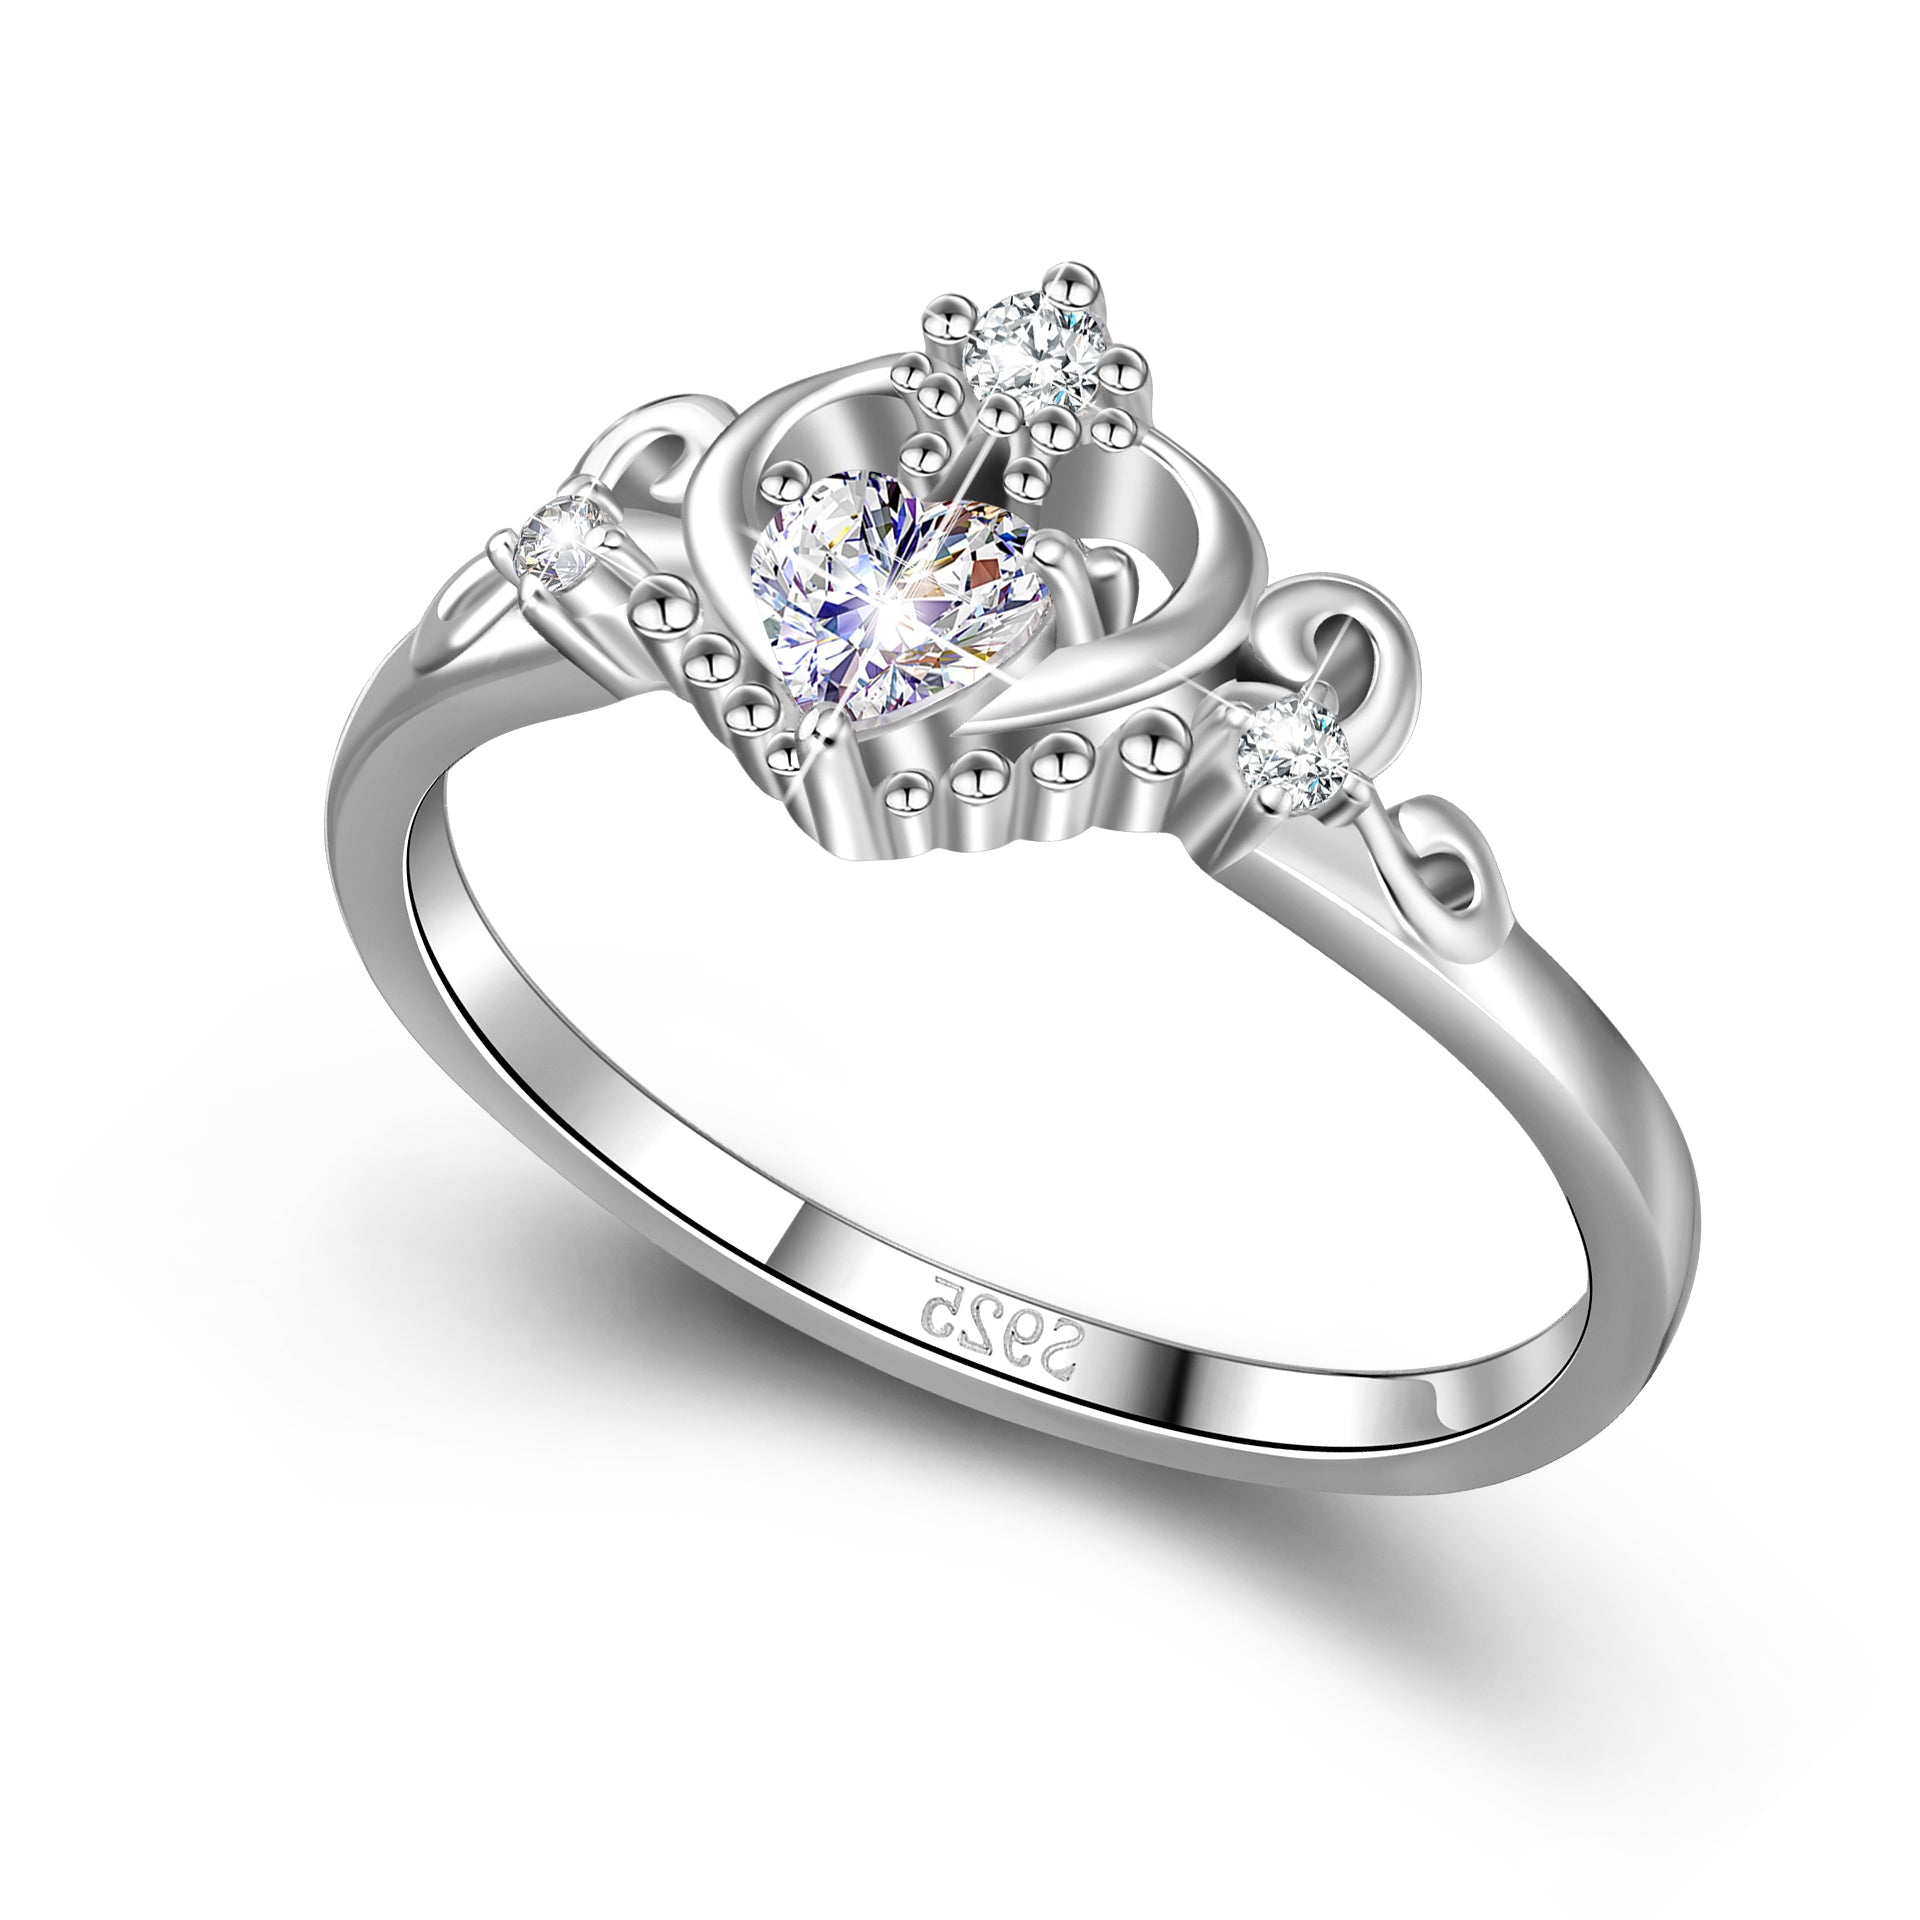 Design Brief: The Princess Ring